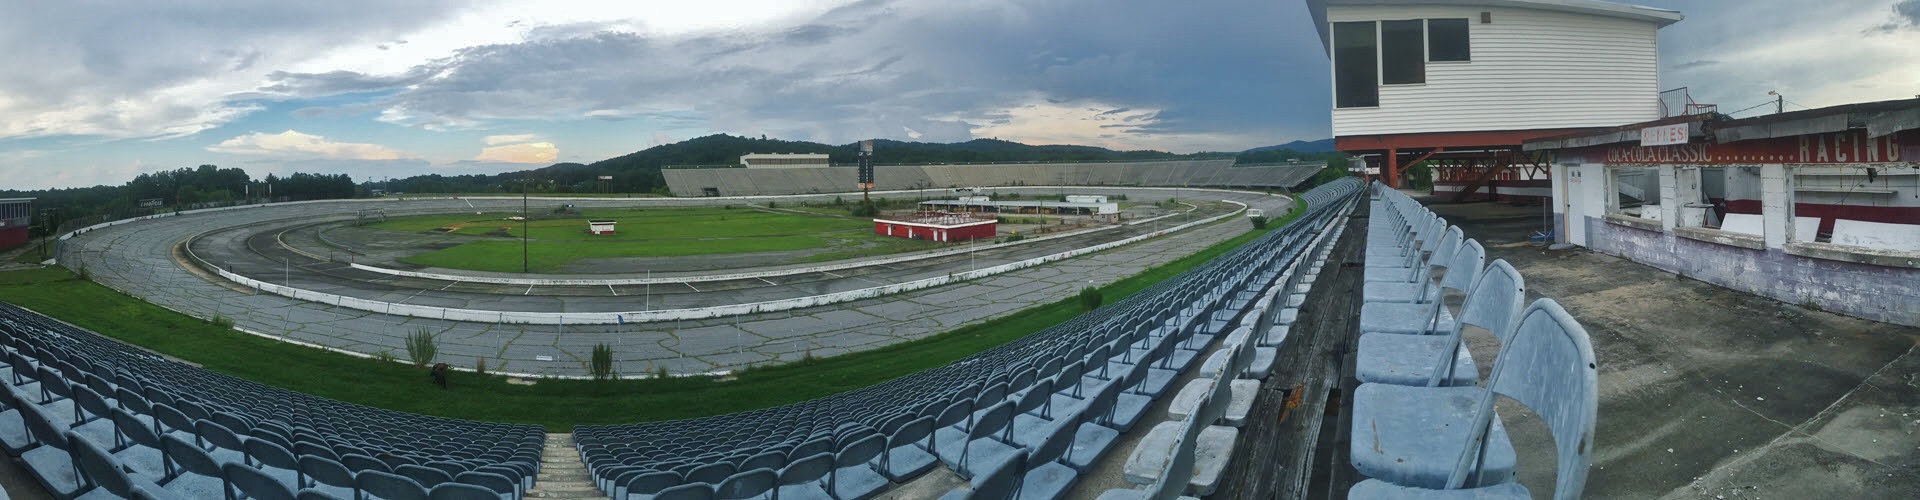 North Wilkesboro Speedway, North Carolina